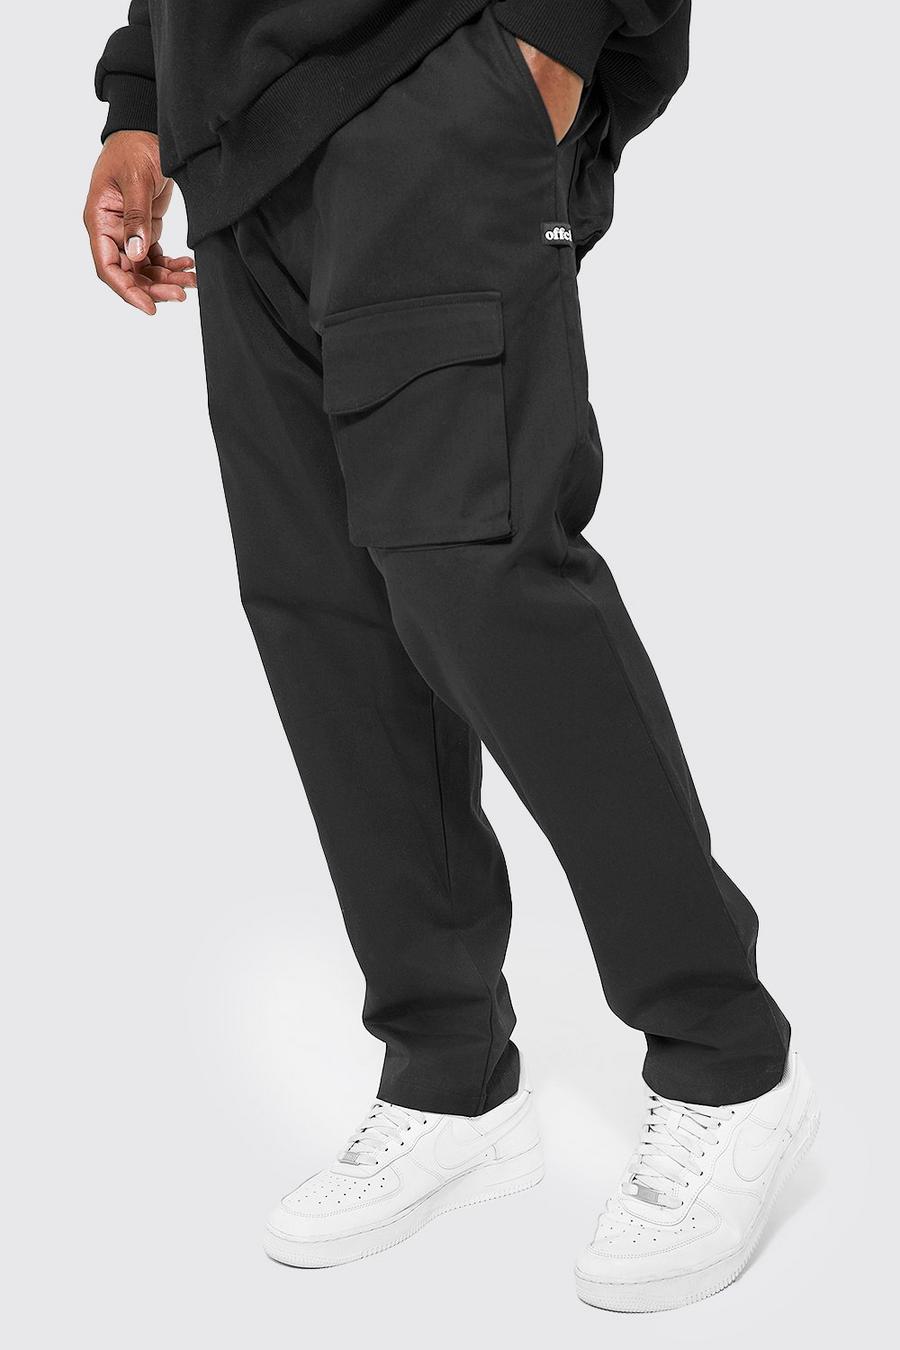 Pantalón Plus ajustado con bolsillos curvos, Black nero